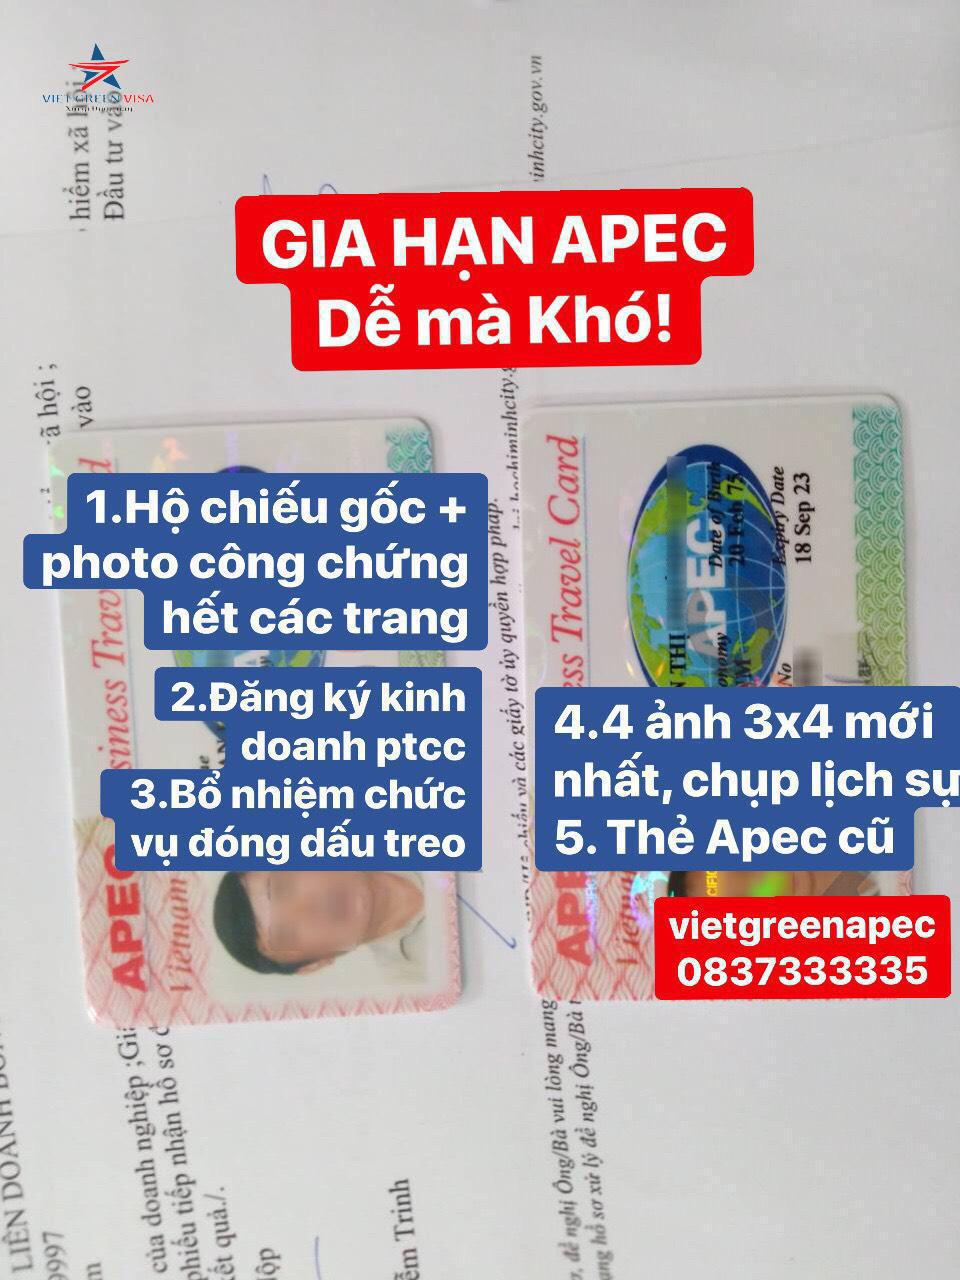 Gia hạn thẻ Apec tại Ninh Thuận, gia hạn thẻ Apec Ninh Thuận, thẻ Apec Ninh Thuận